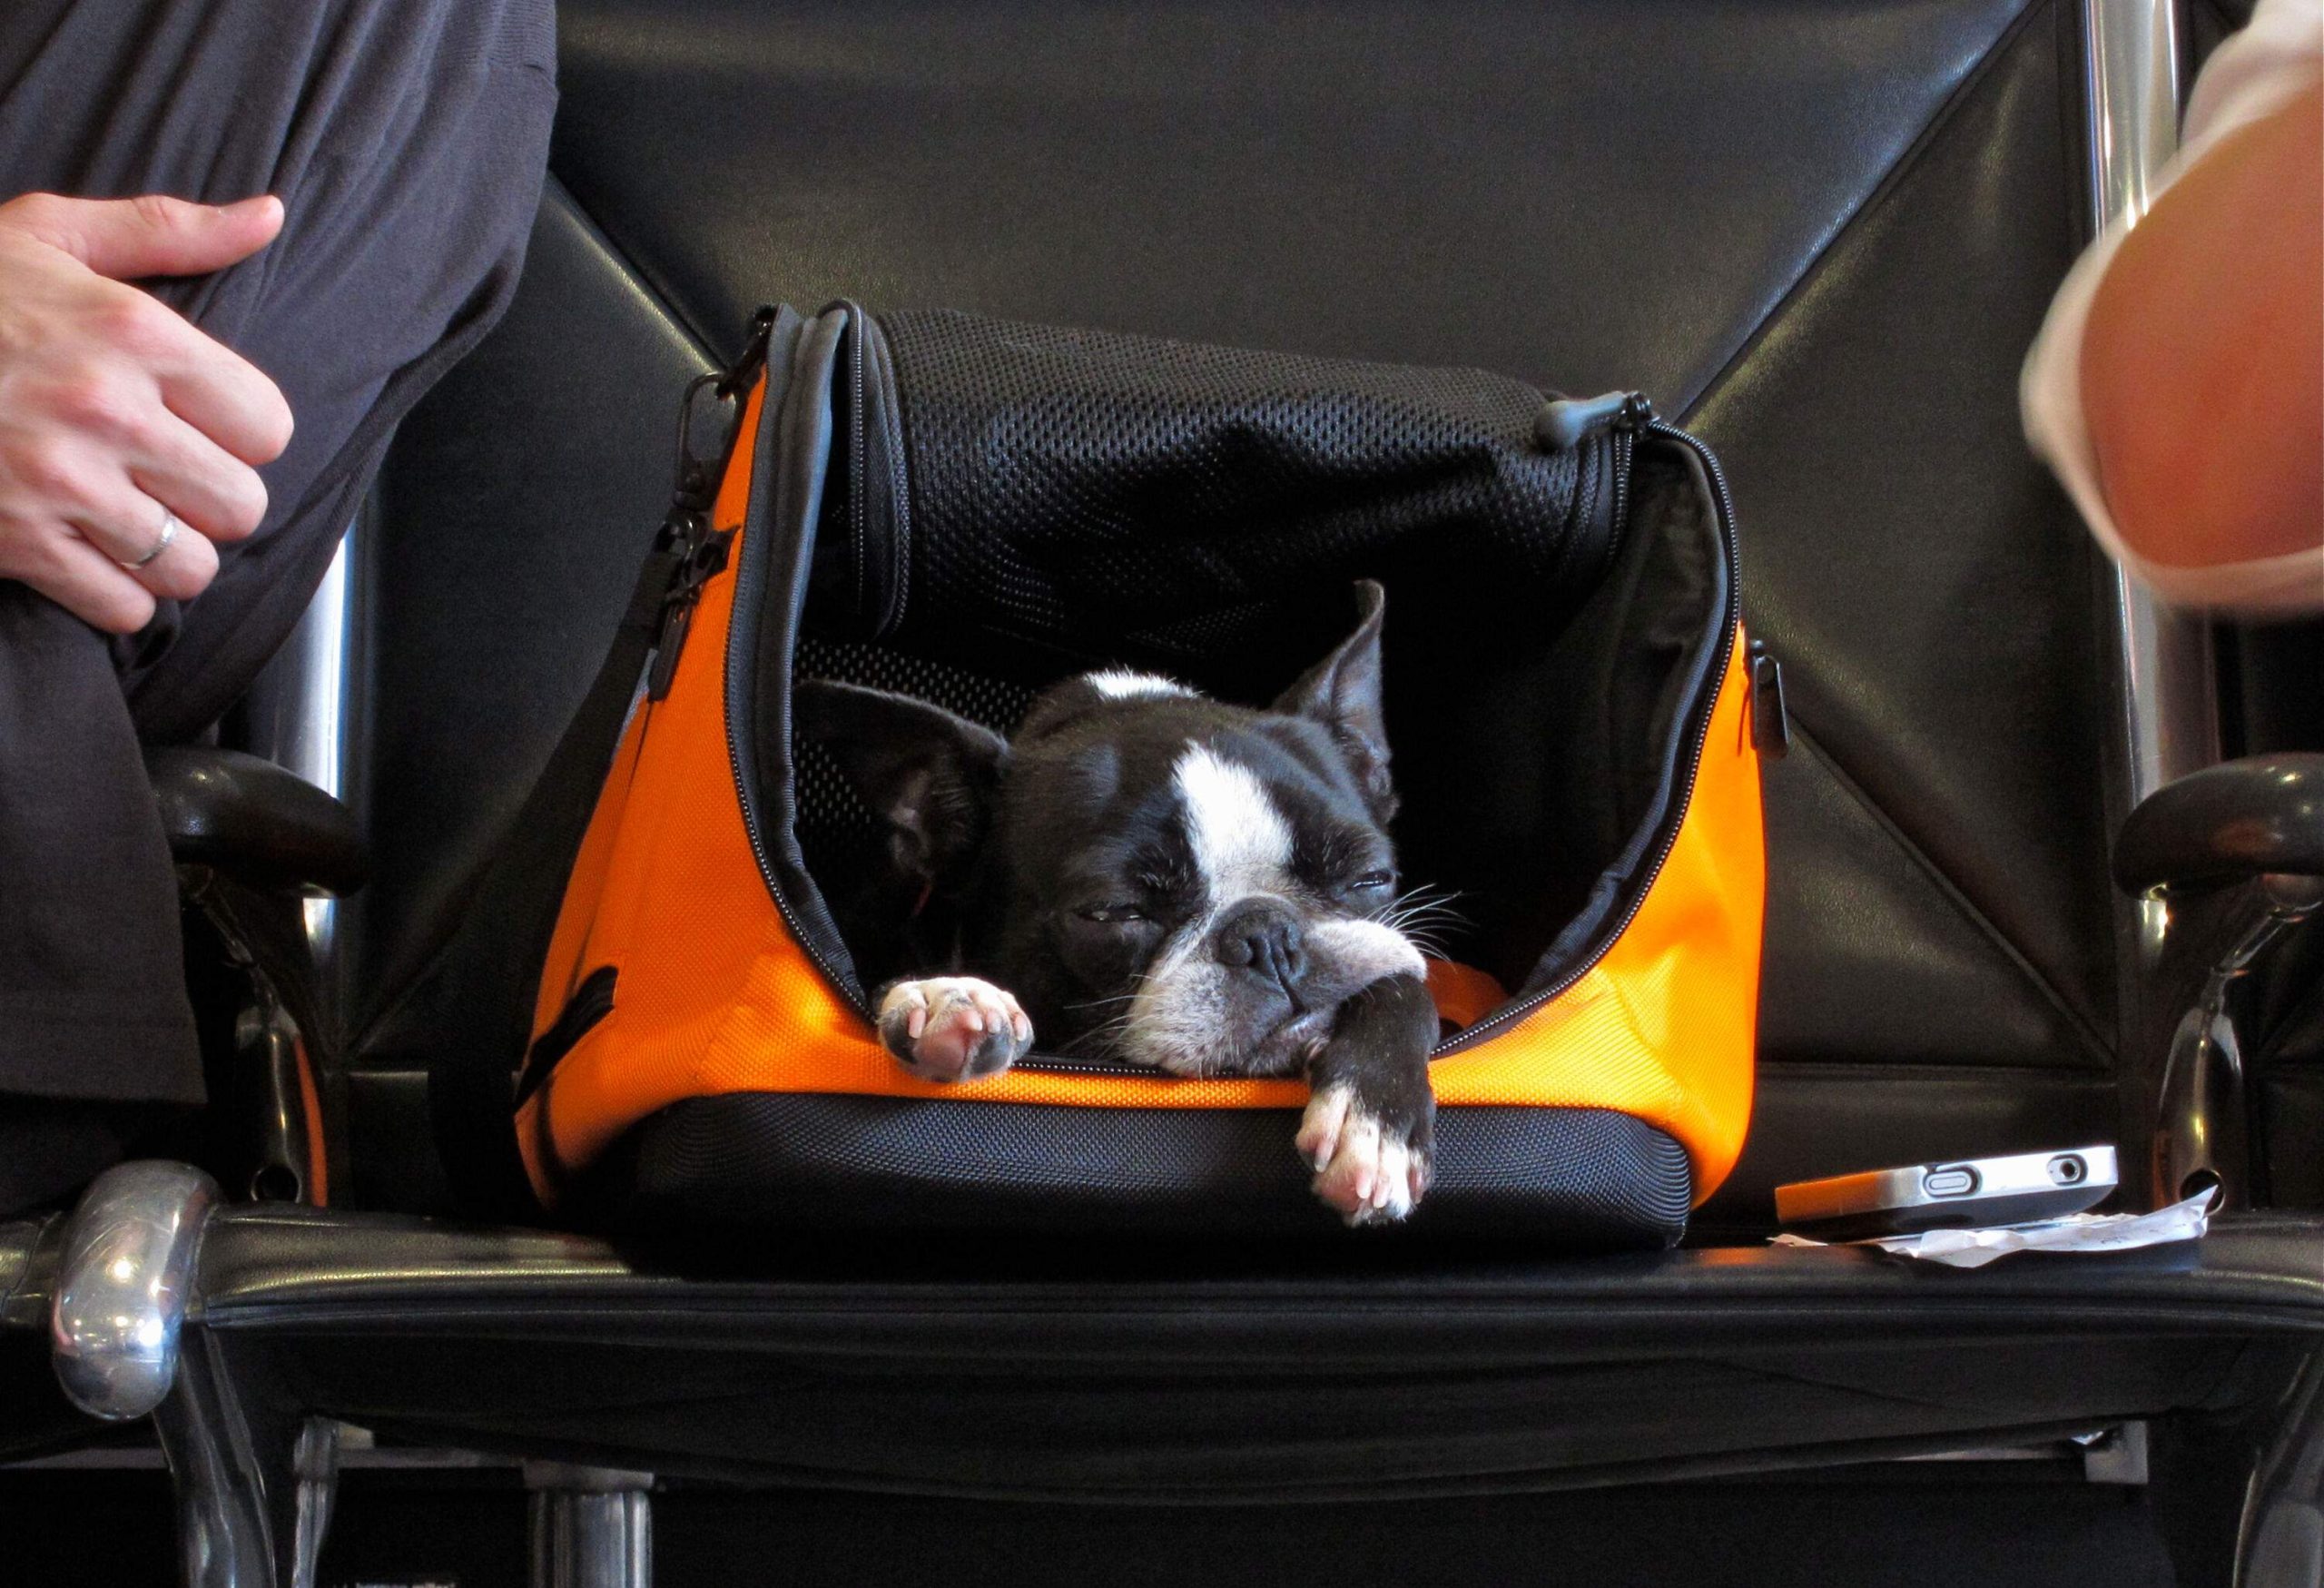 A sleepy black dog inside a square dog bag on a black chair.